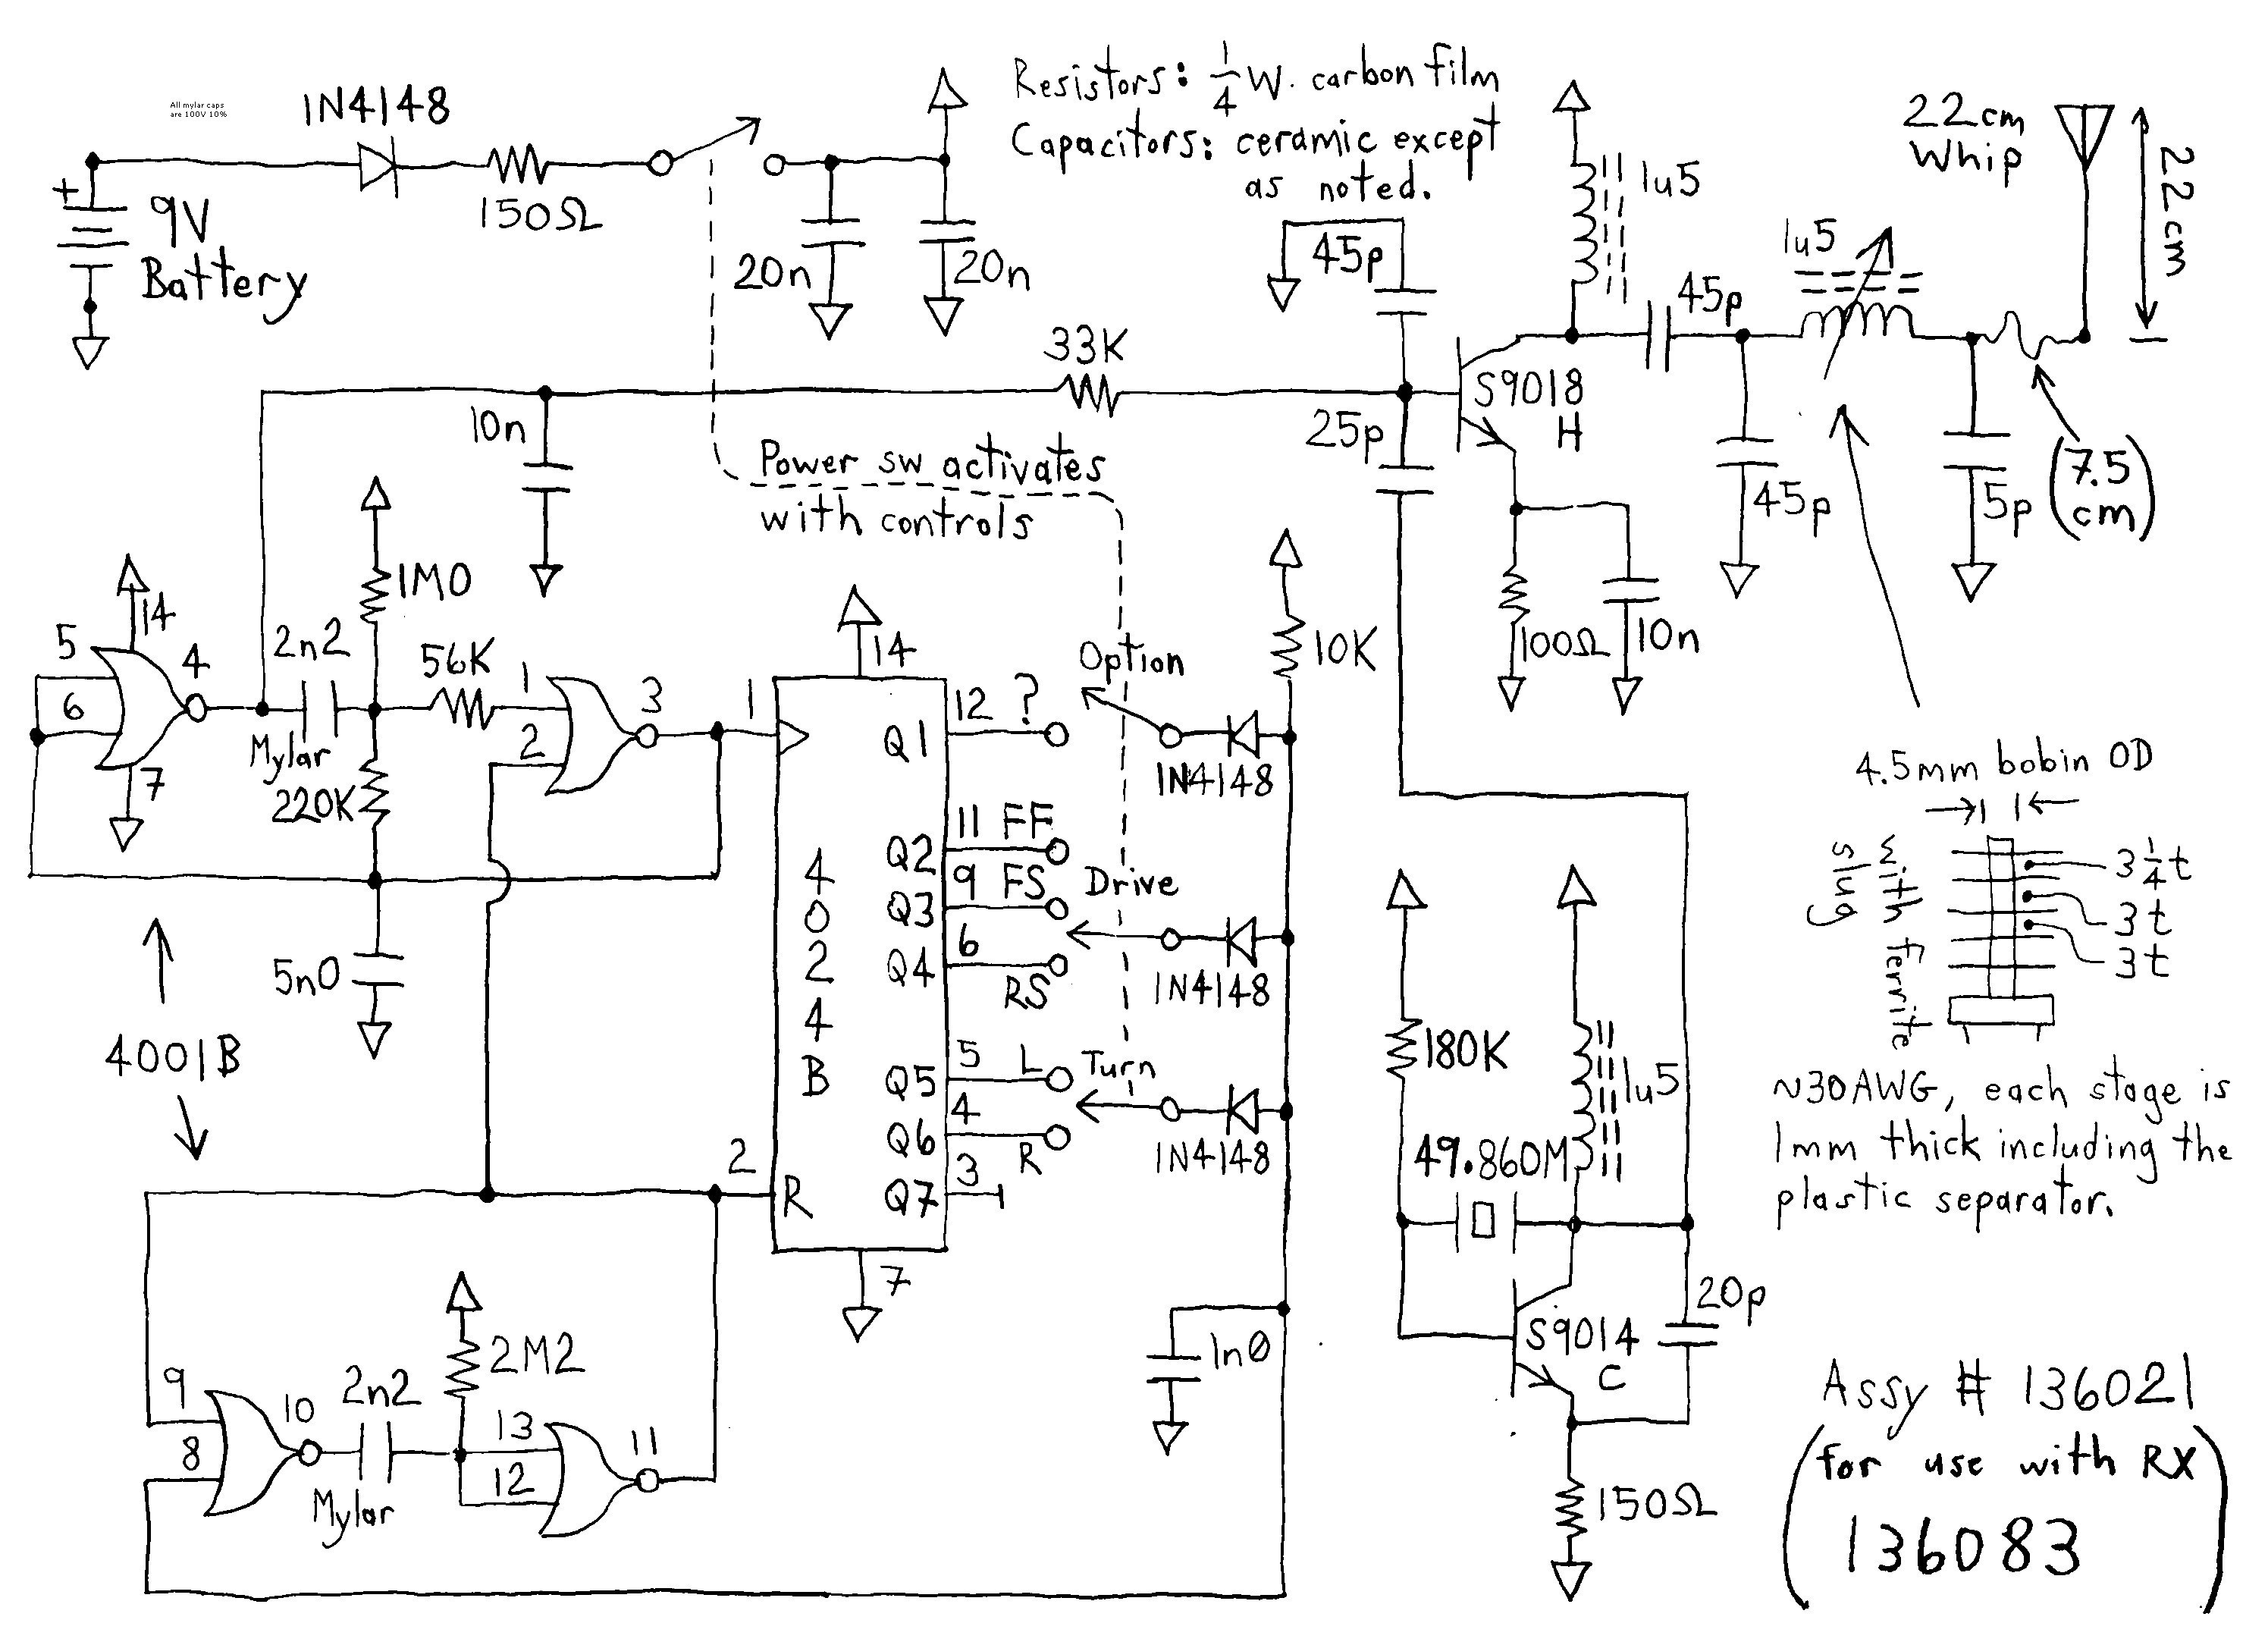 Circuit Diagram Symbols Inspirational Electrical Wiring Diagram Symbols thearchivast